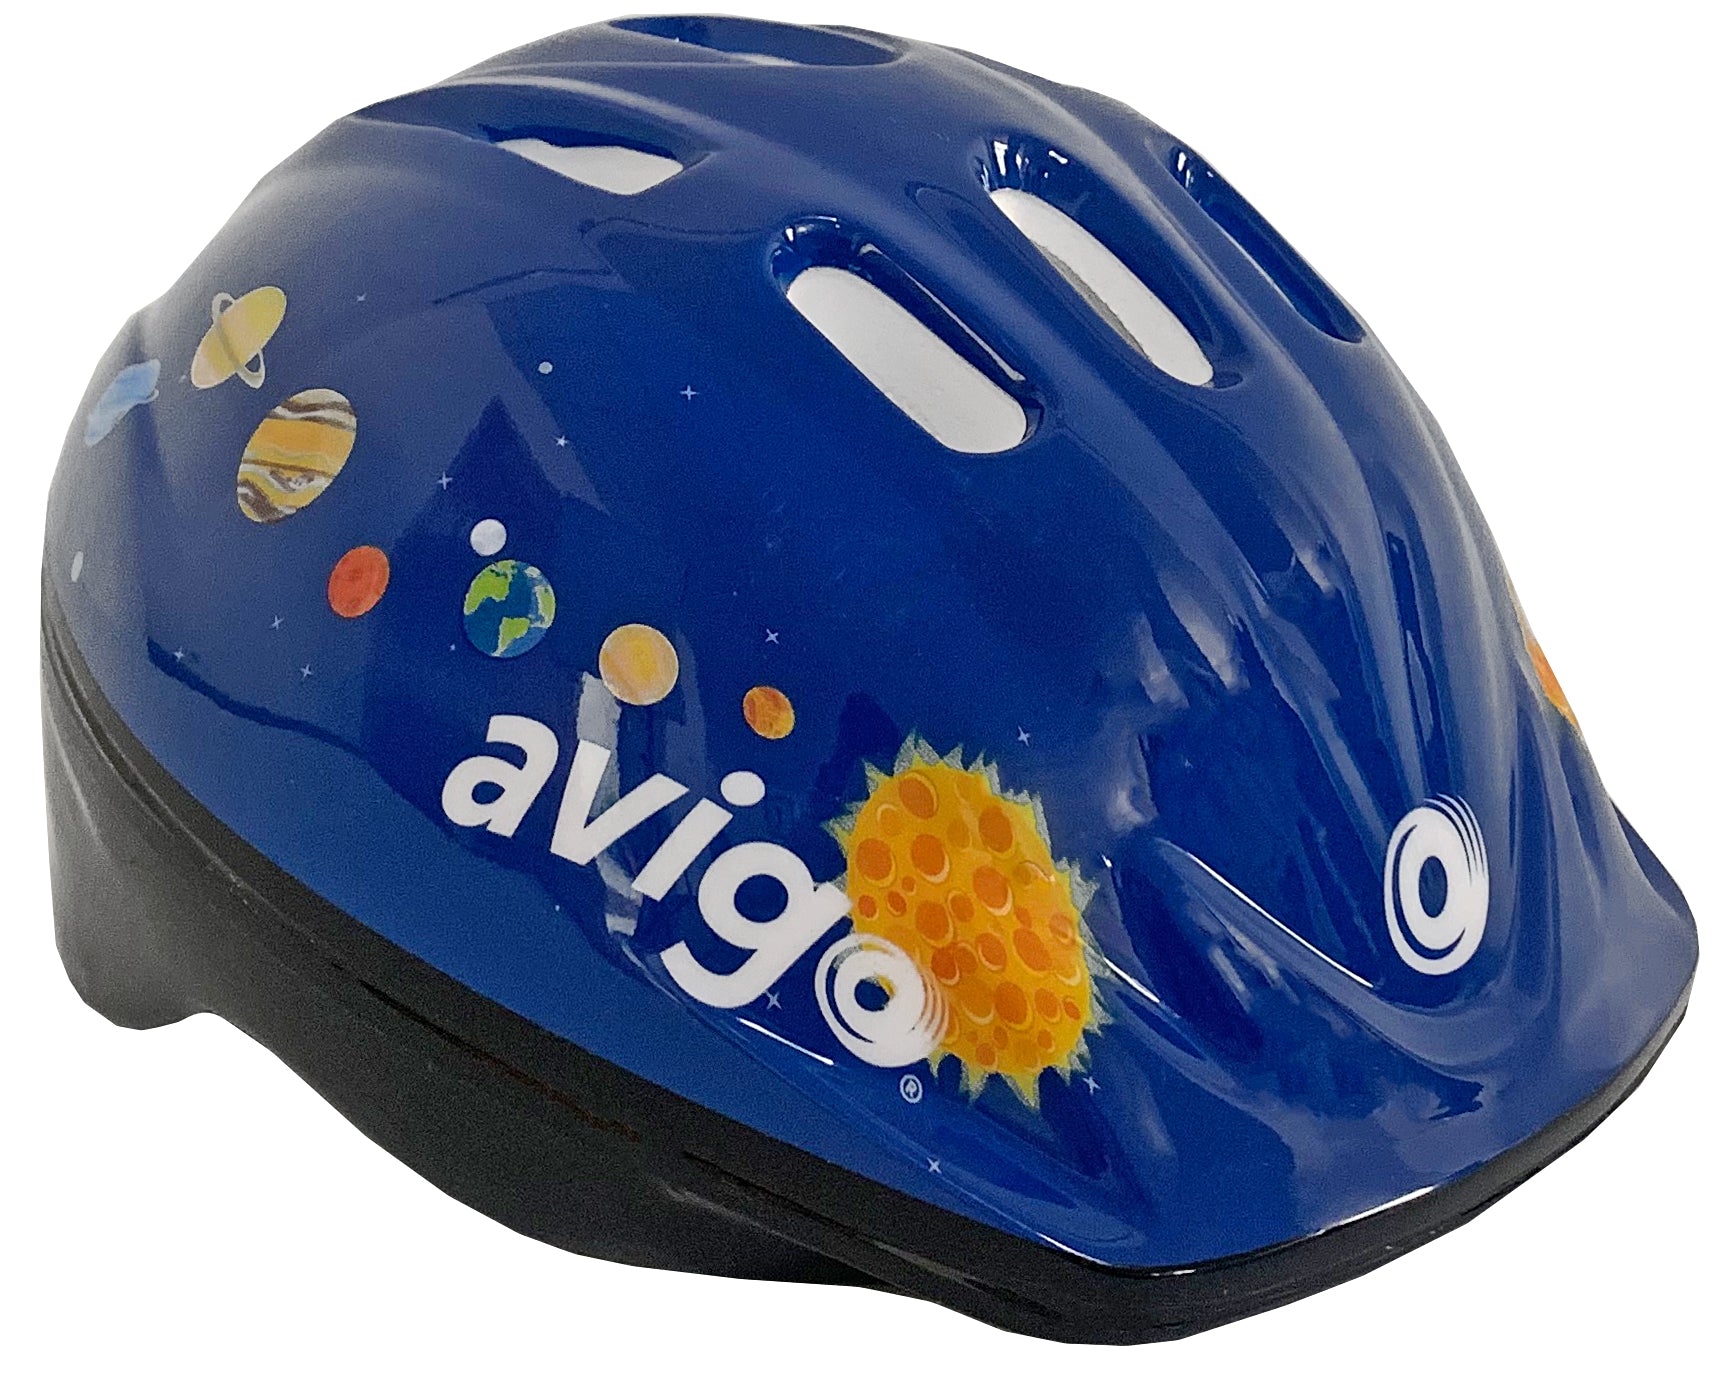 12" Avigo Galaxy Bike with Helmet